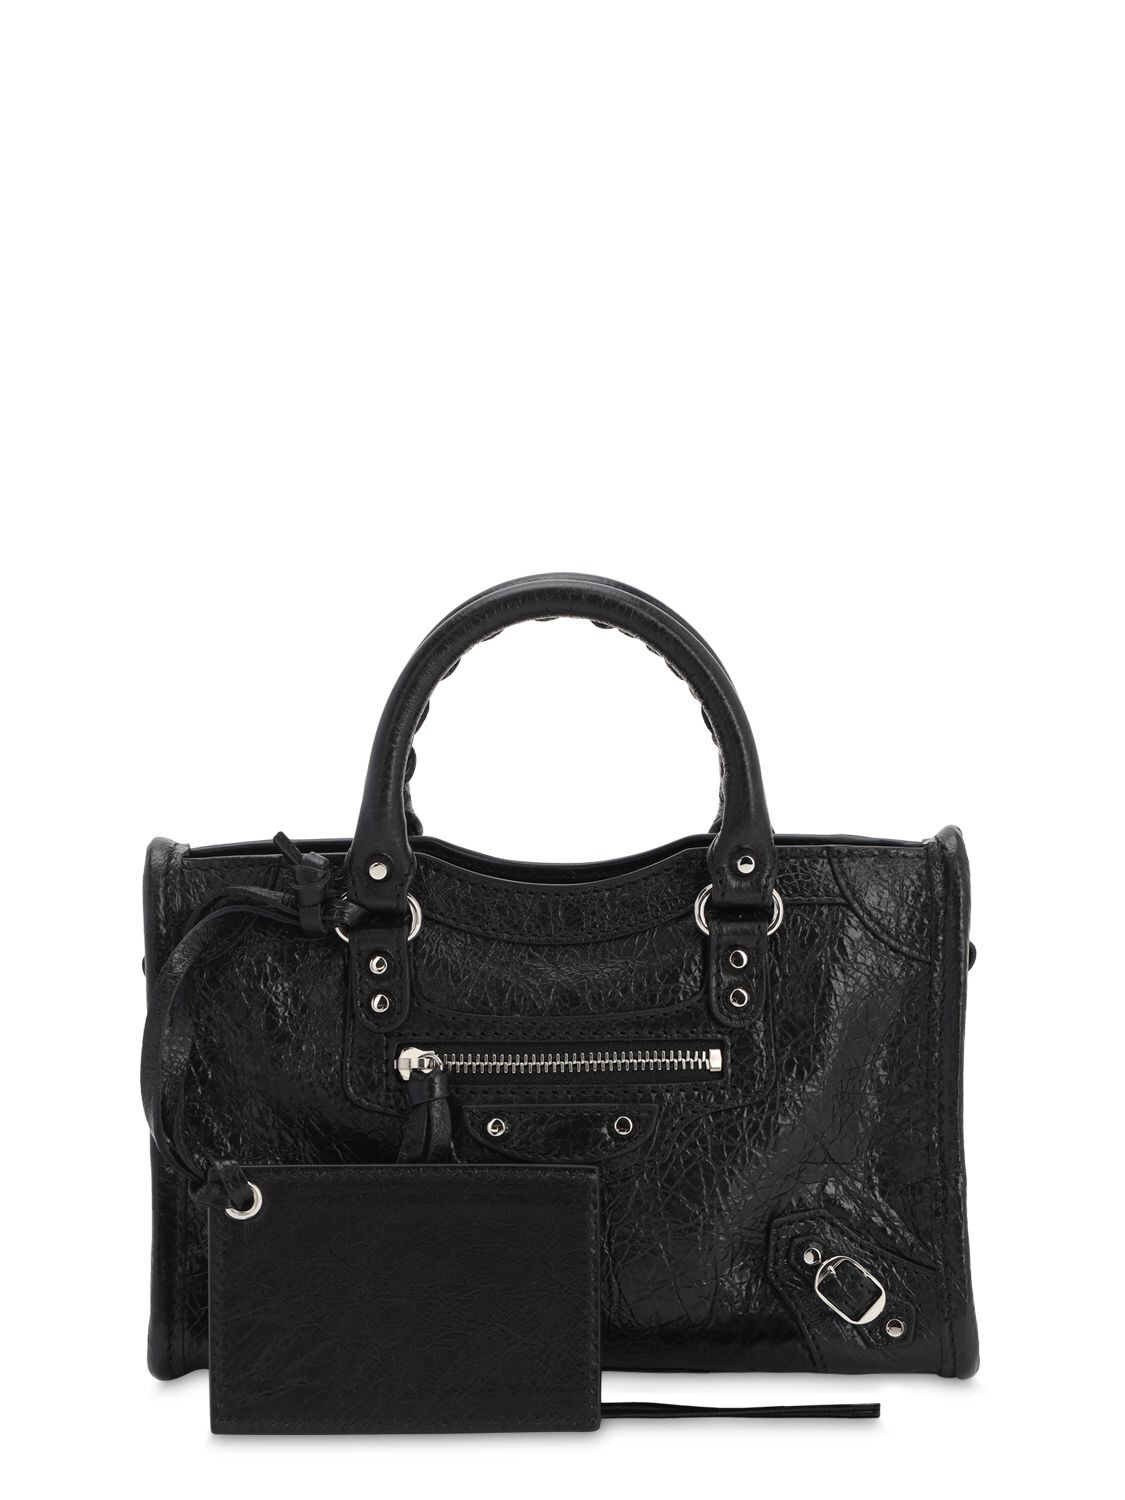 Balenciaga Nano City Leather Bag In Black